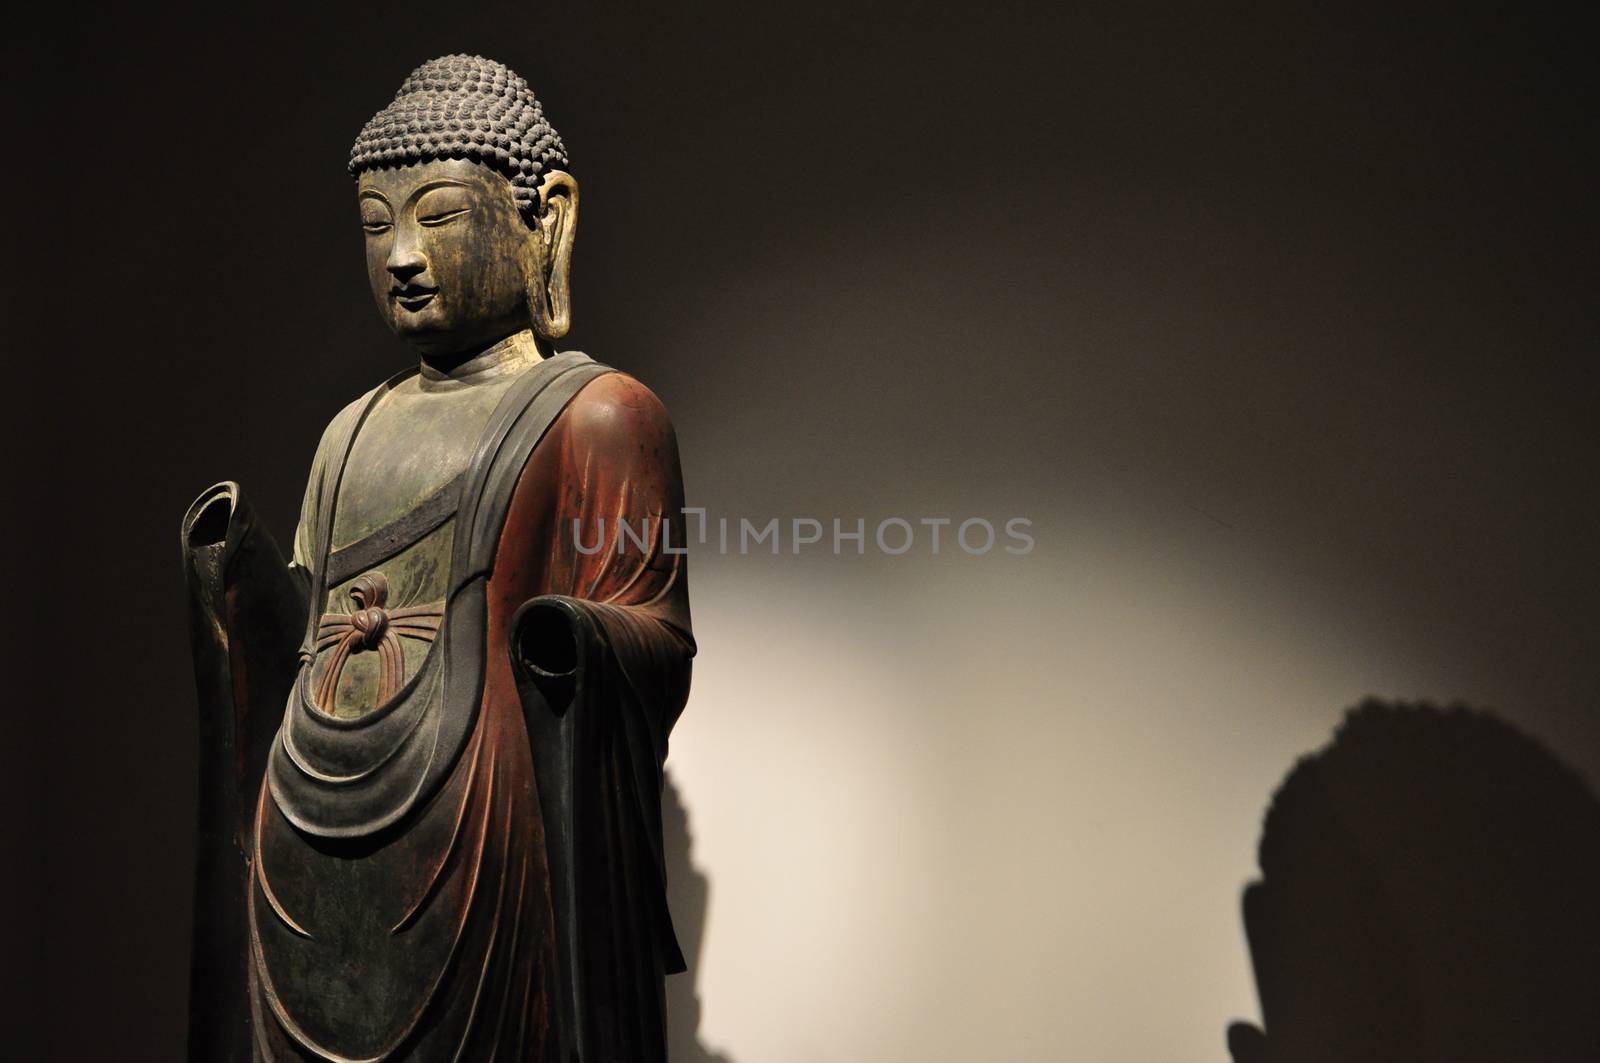 Bhaisaiyaguru Buddha statue in Gyeongju museum, South Korea by lakiluciano